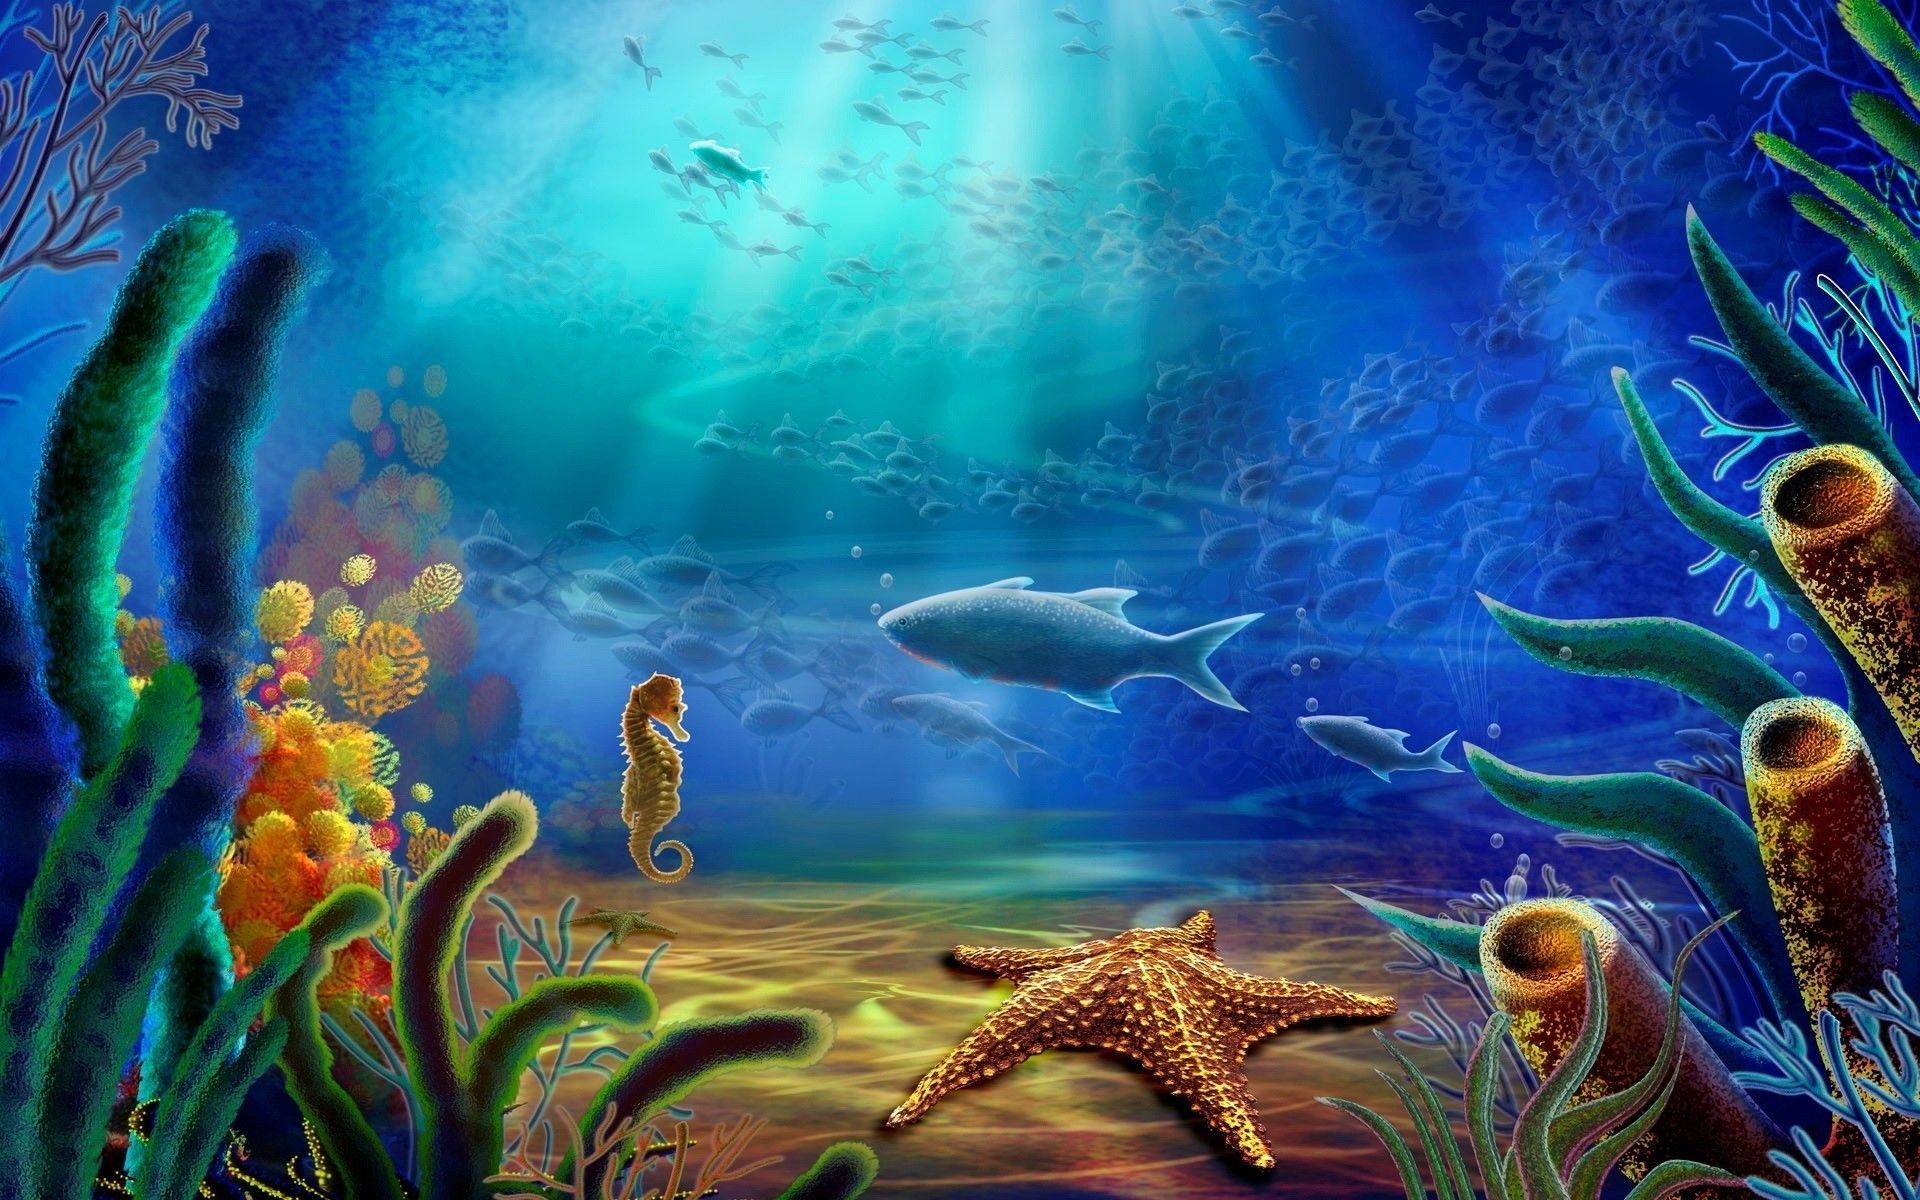 Ocean Life Wallpaper. Underwater Wallpaper, Underwater Painting, Art Wallpaper